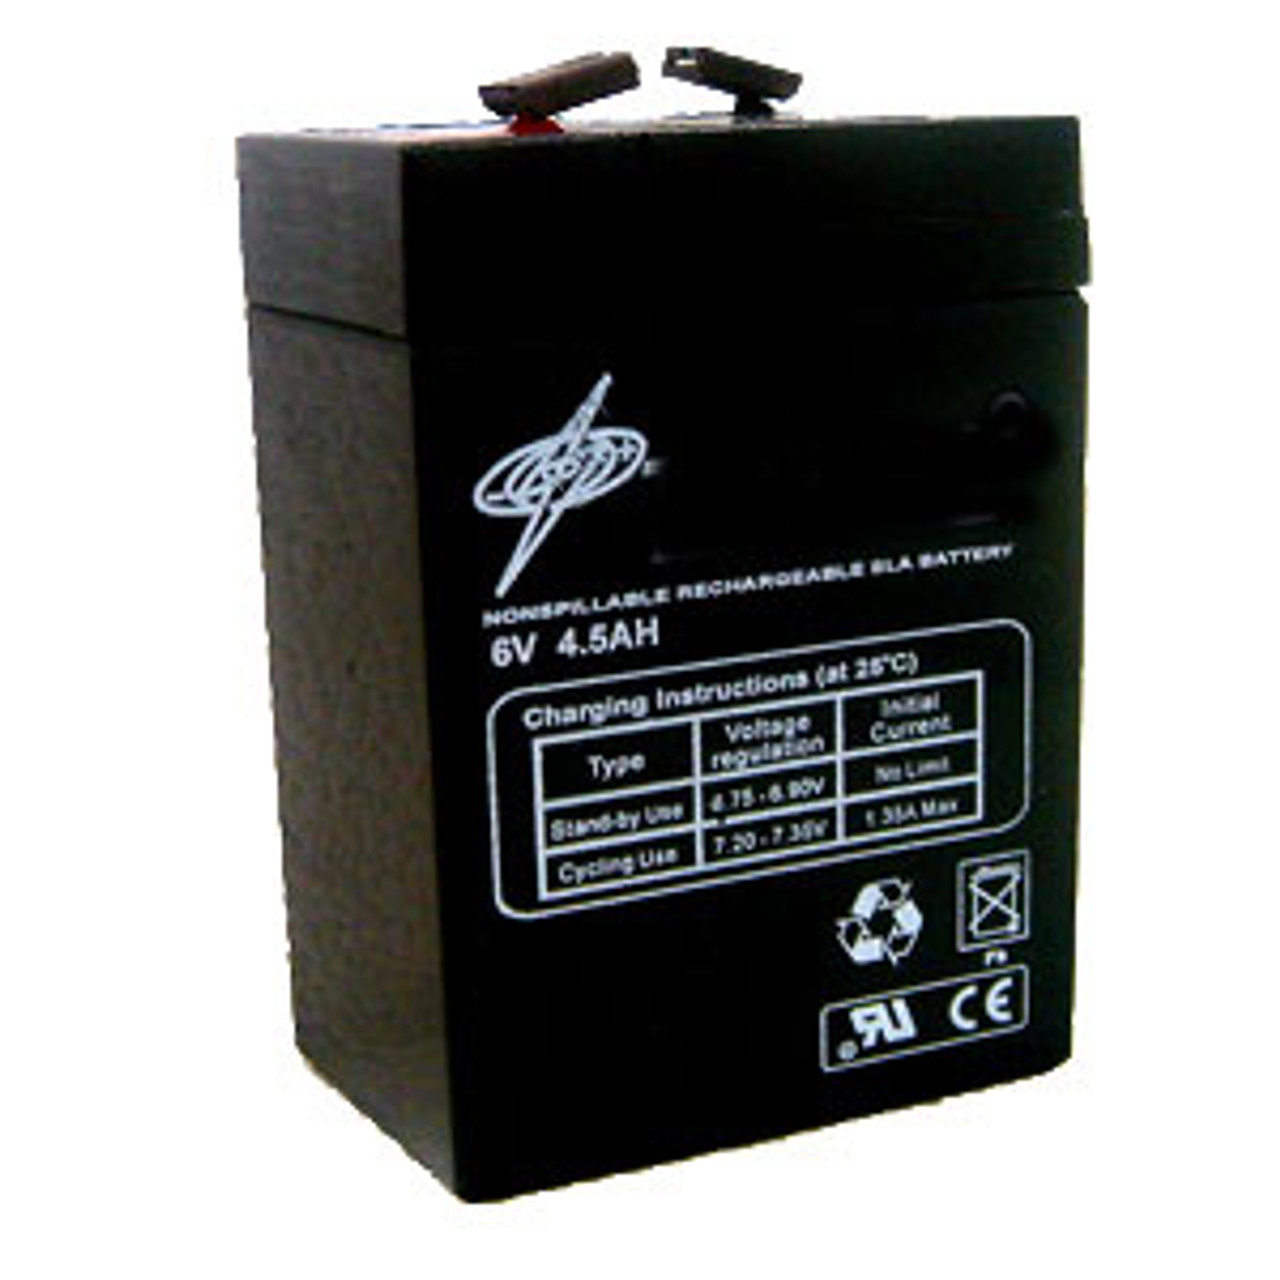 Leoch Battery DJW6-13 Replacement Battery